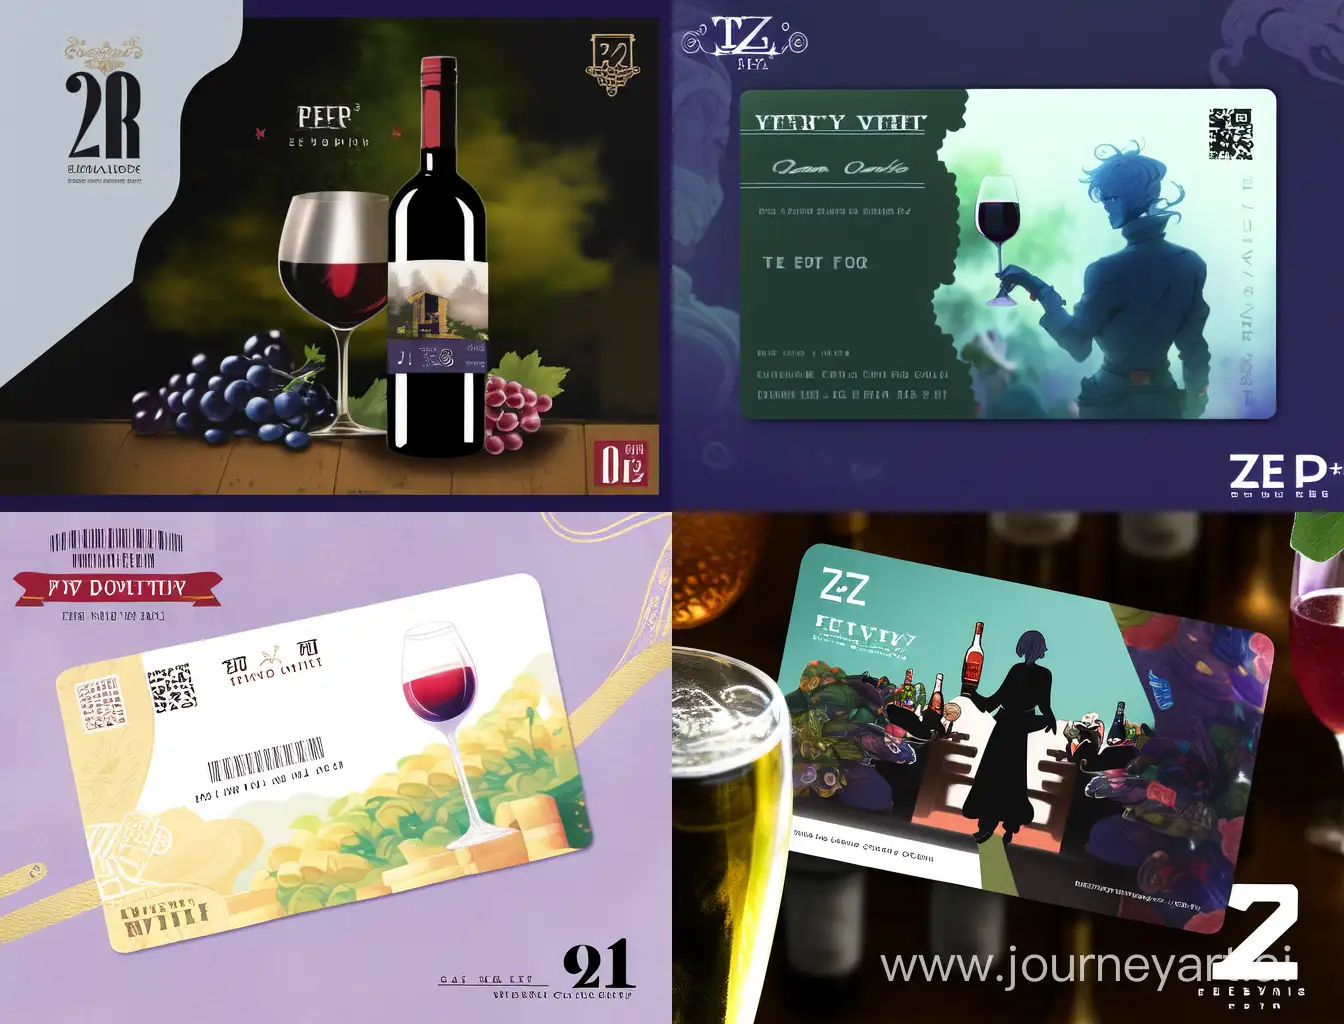 Scenic-Winery-Discount-Card-Niji-4-AR-43-Design-No-6639